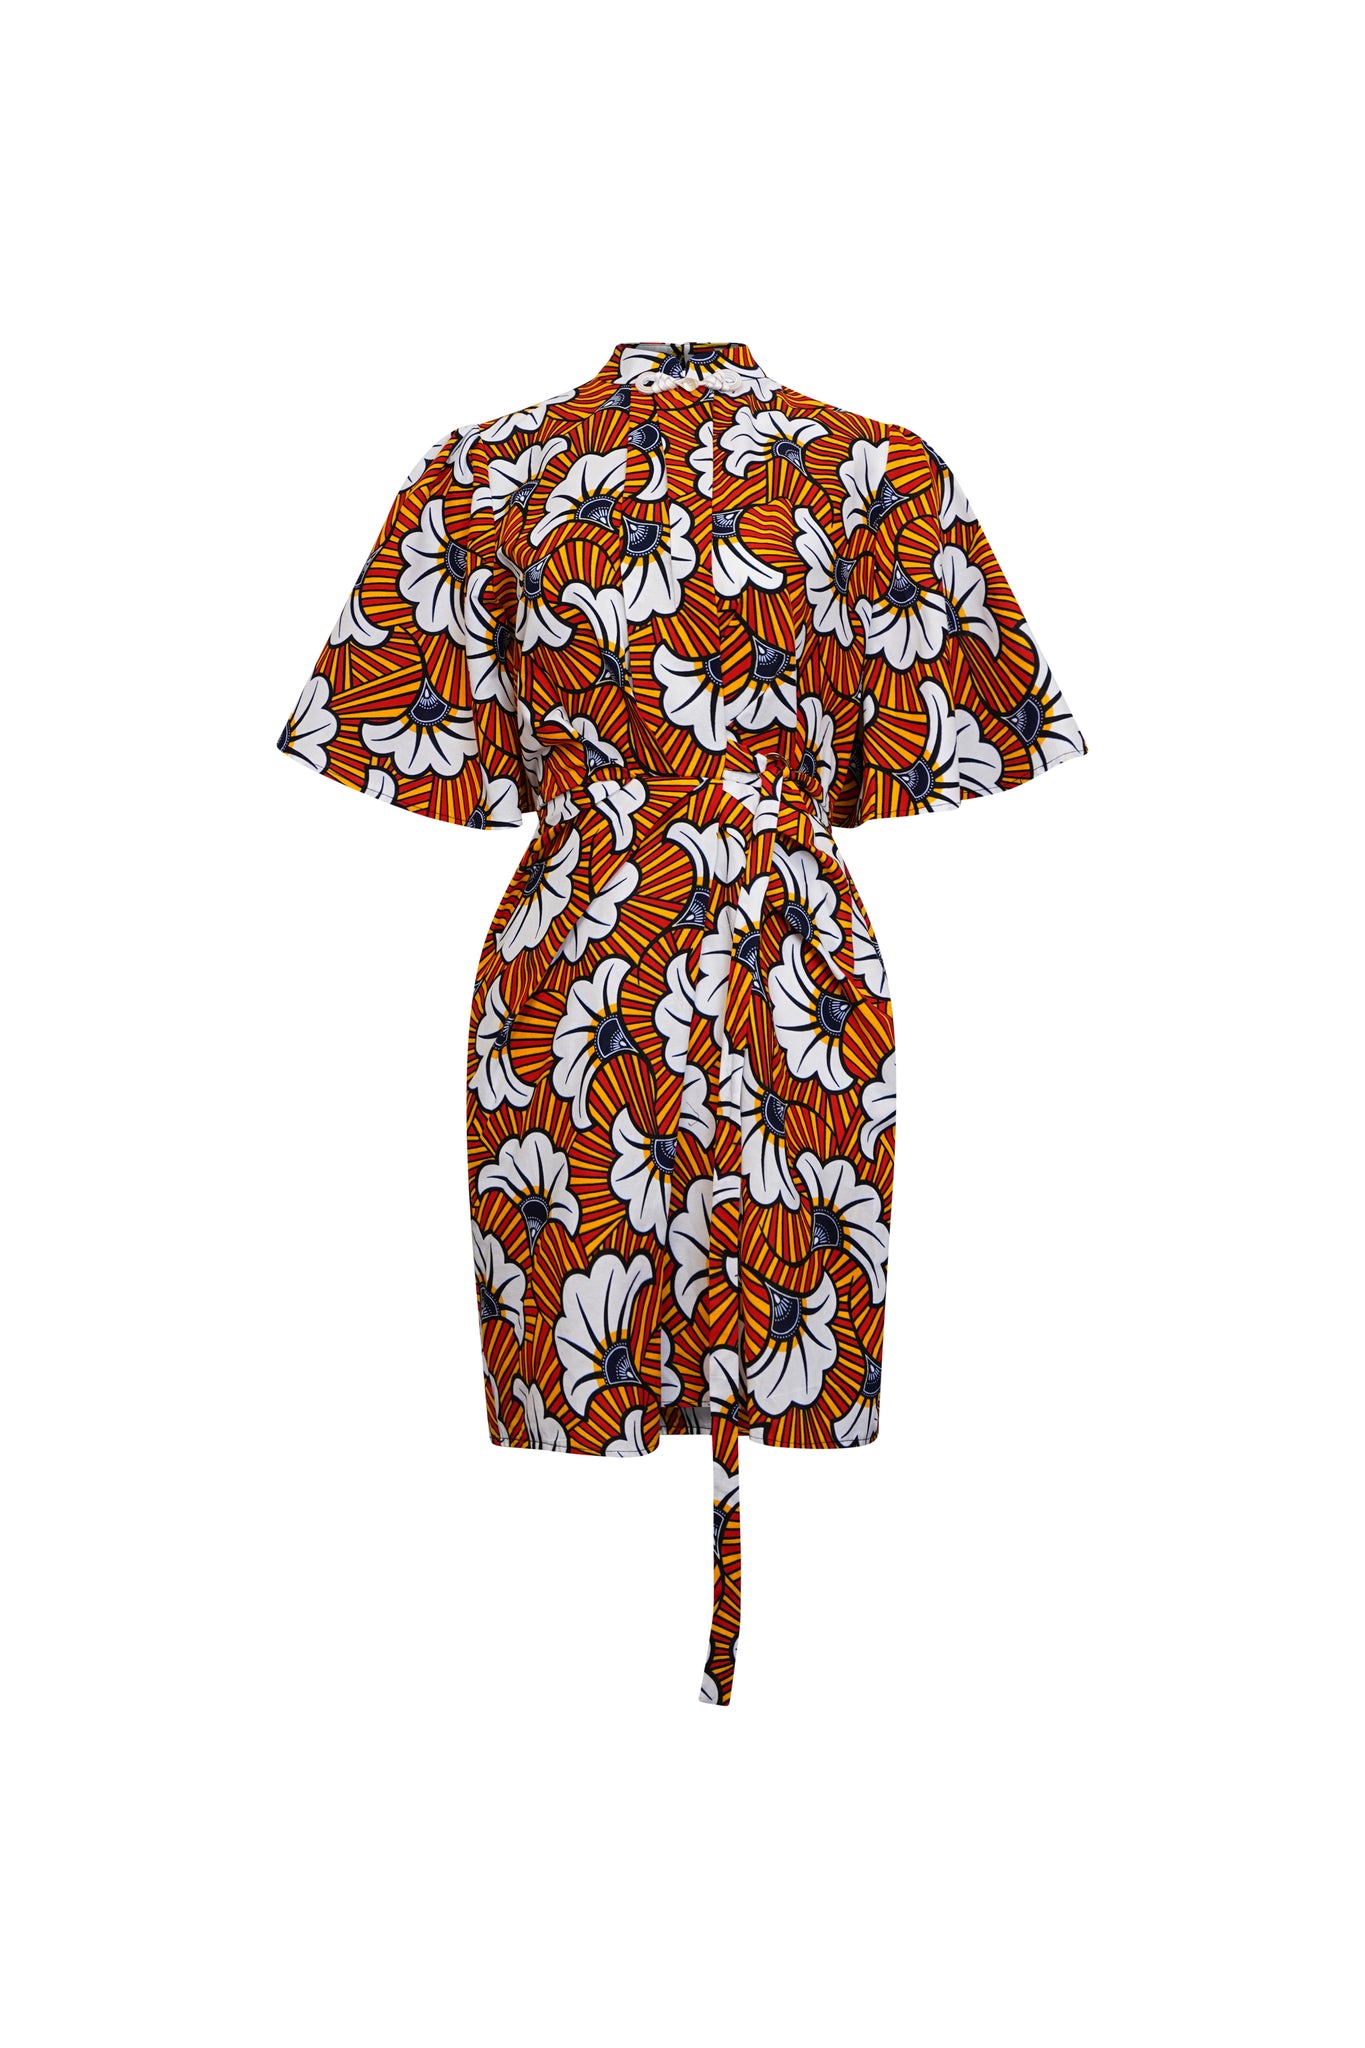 Adaku Cheongsam Dress - White and Orange Rolls Royce African Ankara Wax Cotton Print